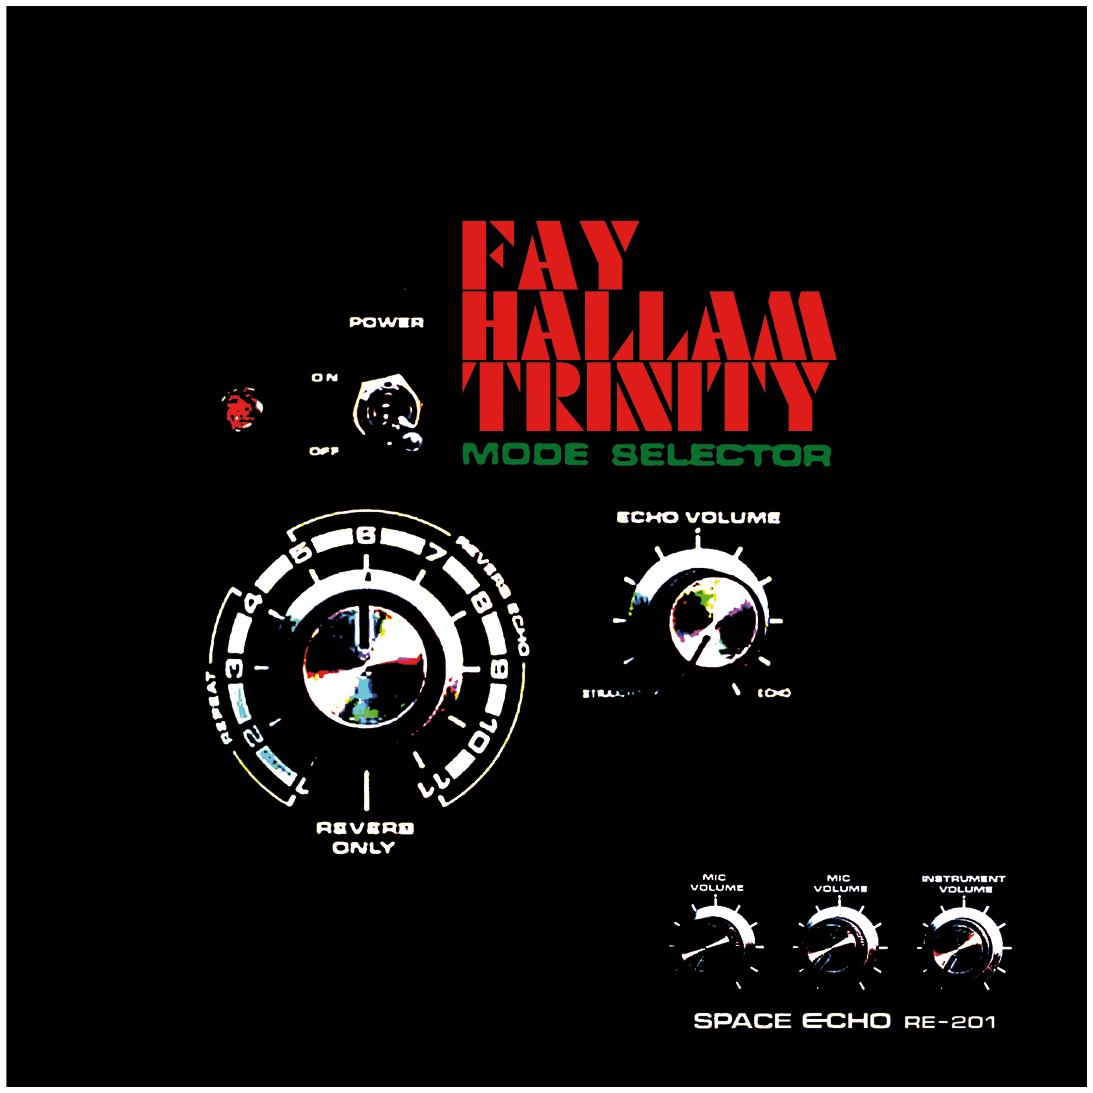 FAY HALLAM TRINITY "Mode Selector" EP